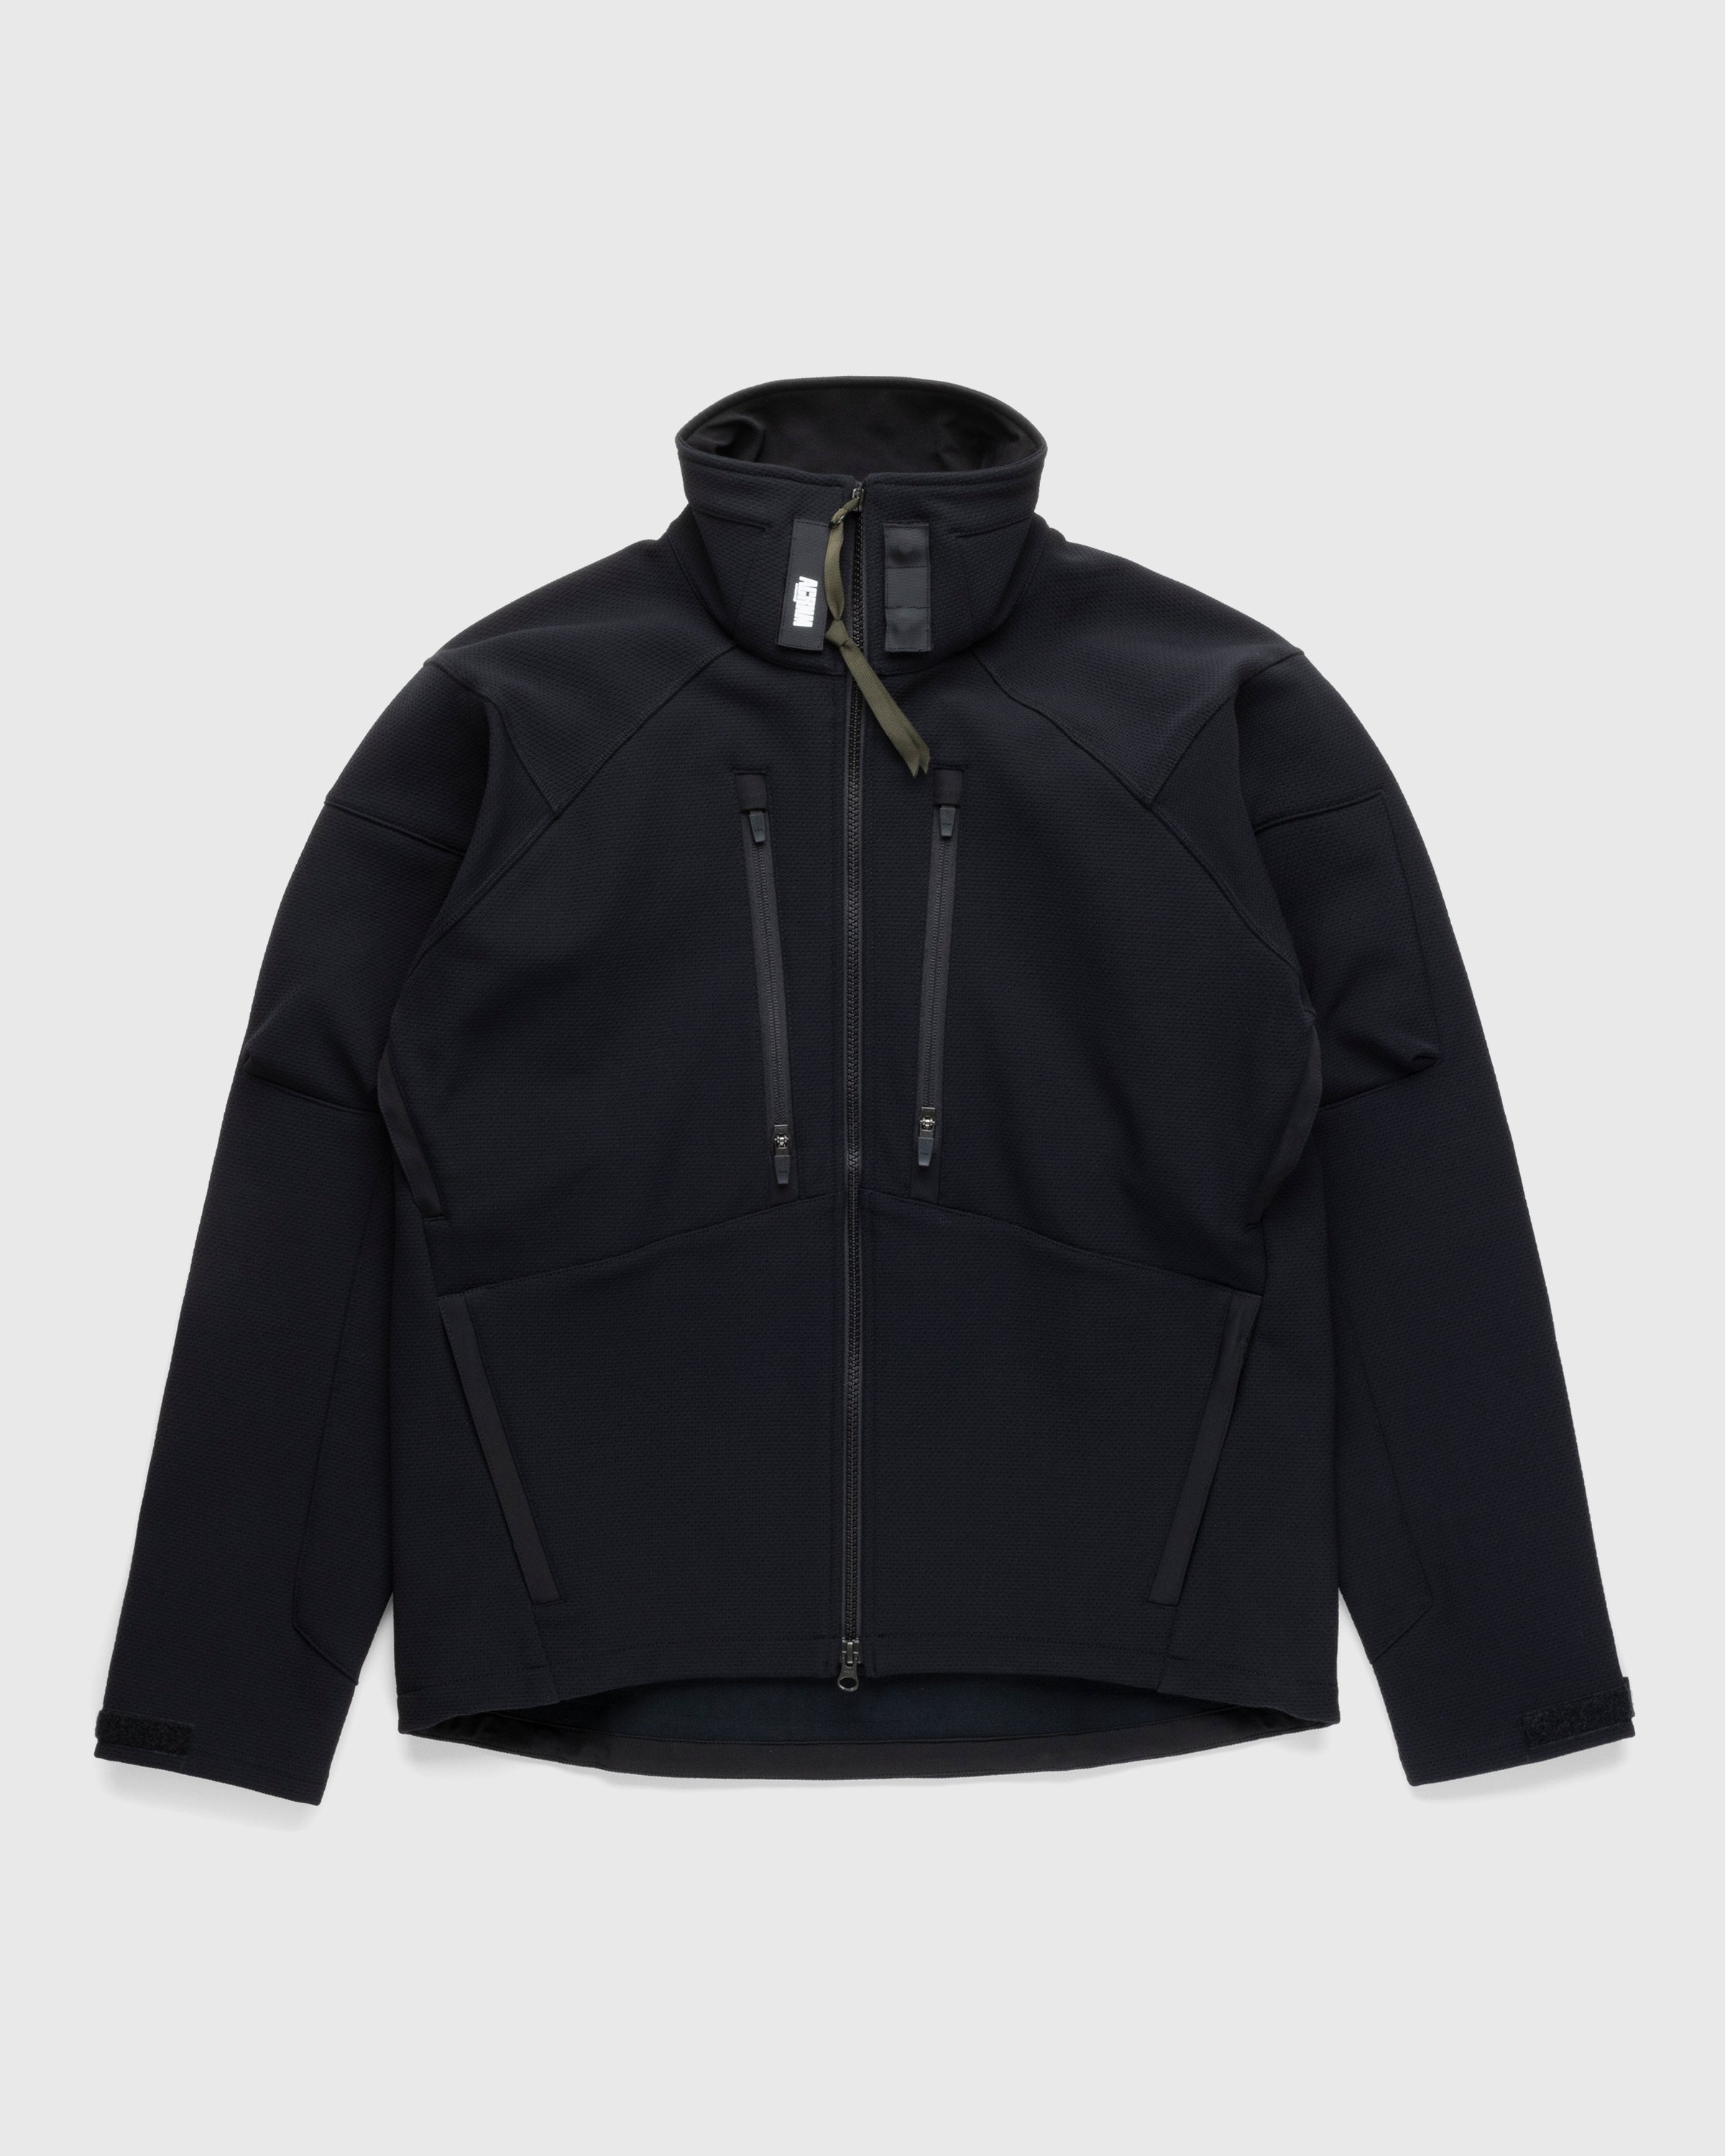 ACRONYM – J107-SS Jacket Black | Highsnobiety Shop